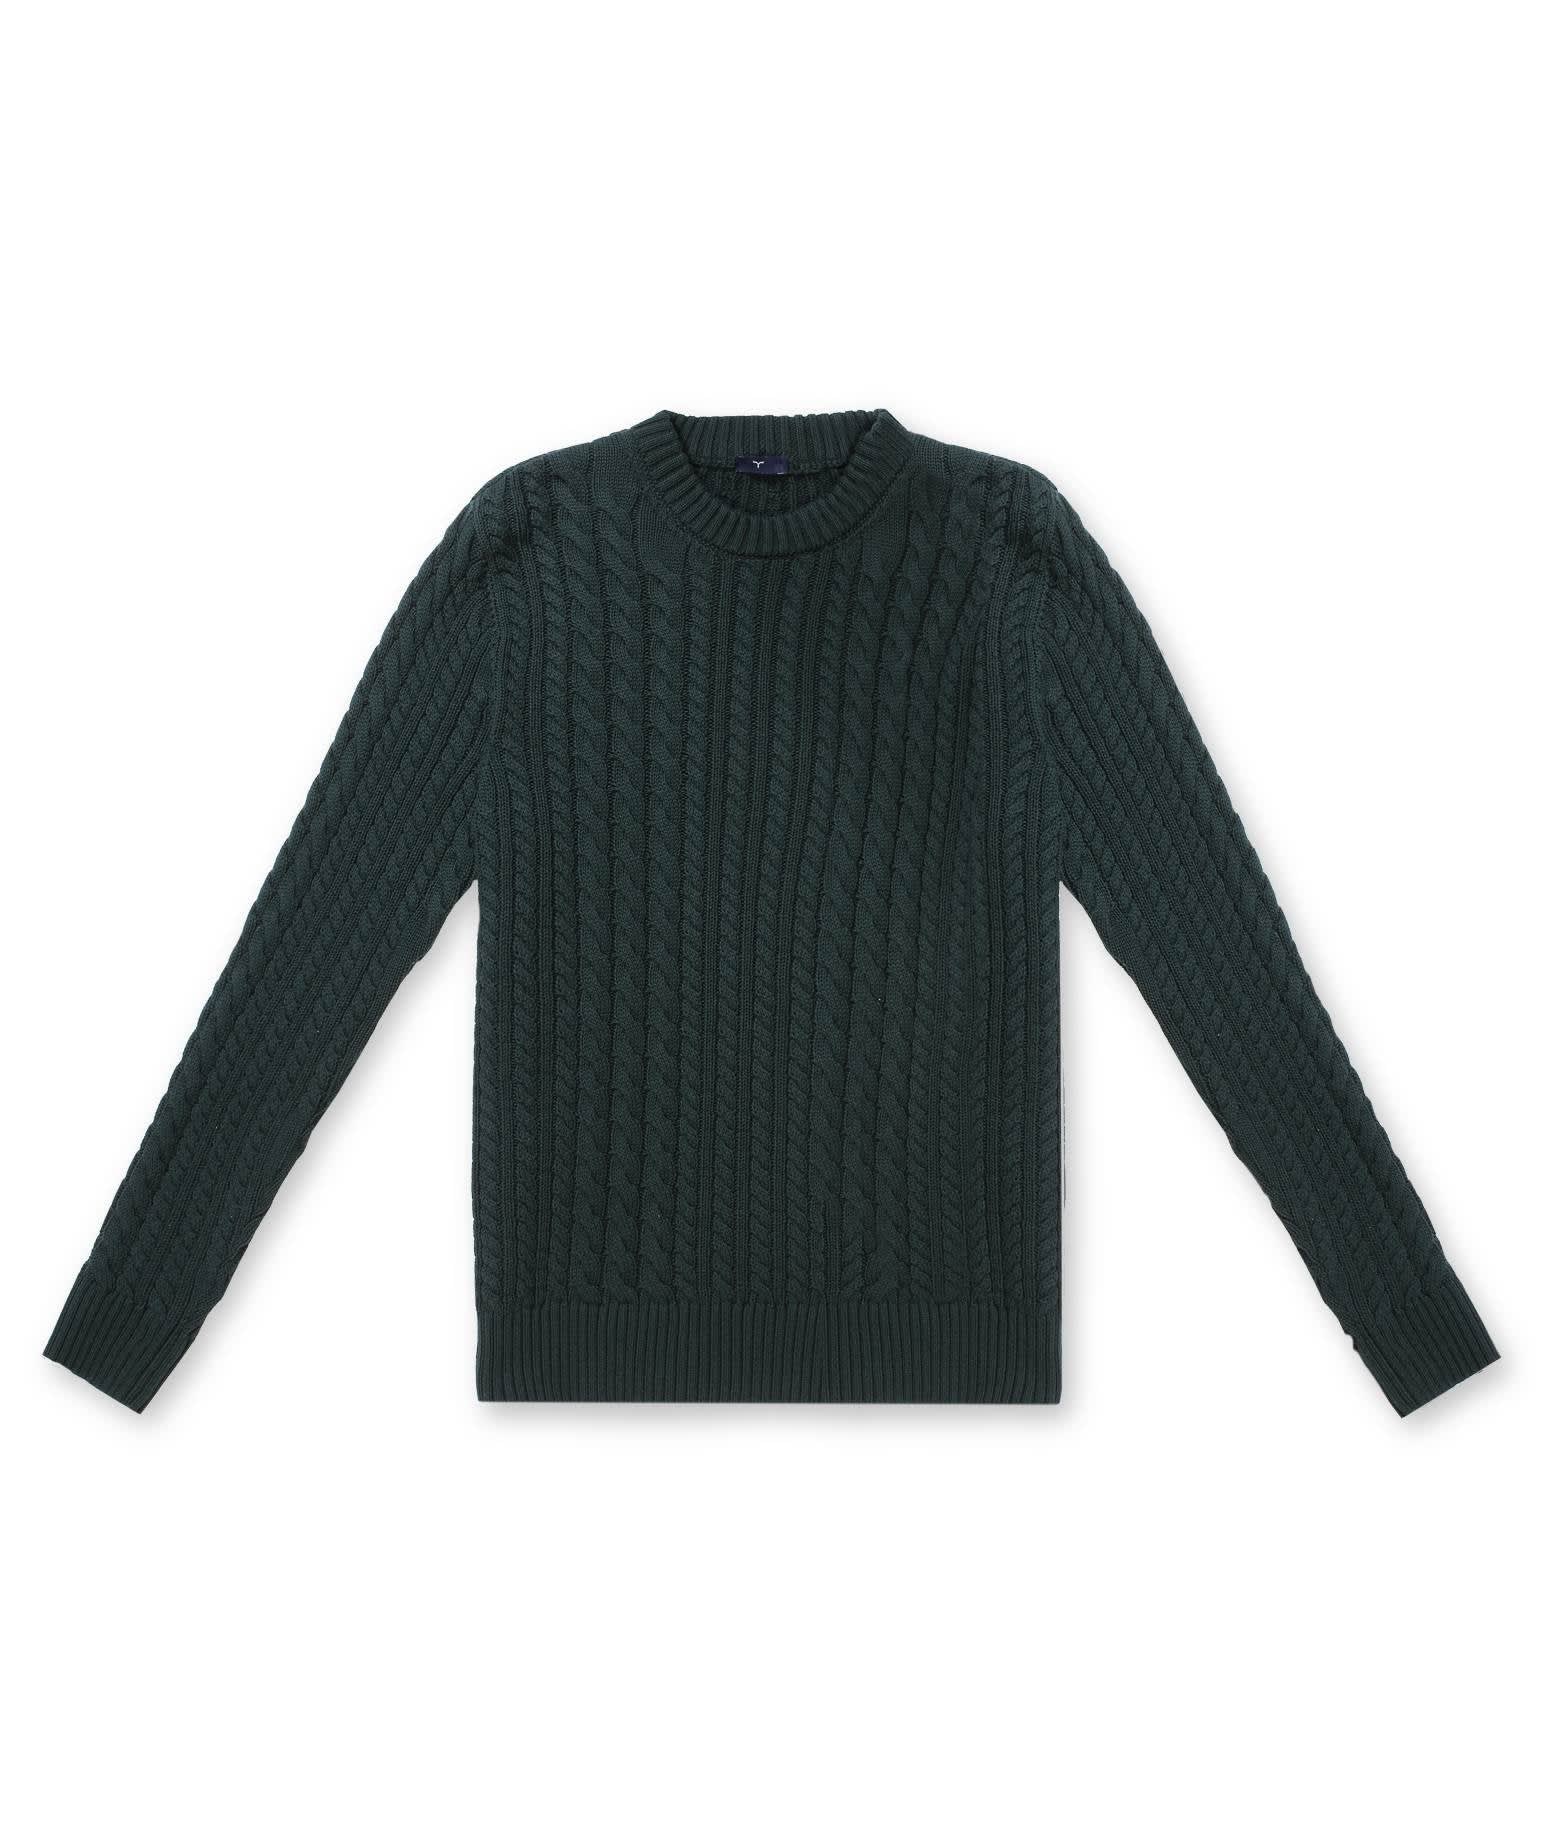 Larusmiani Sweater Brody Sweater In Darkgreen